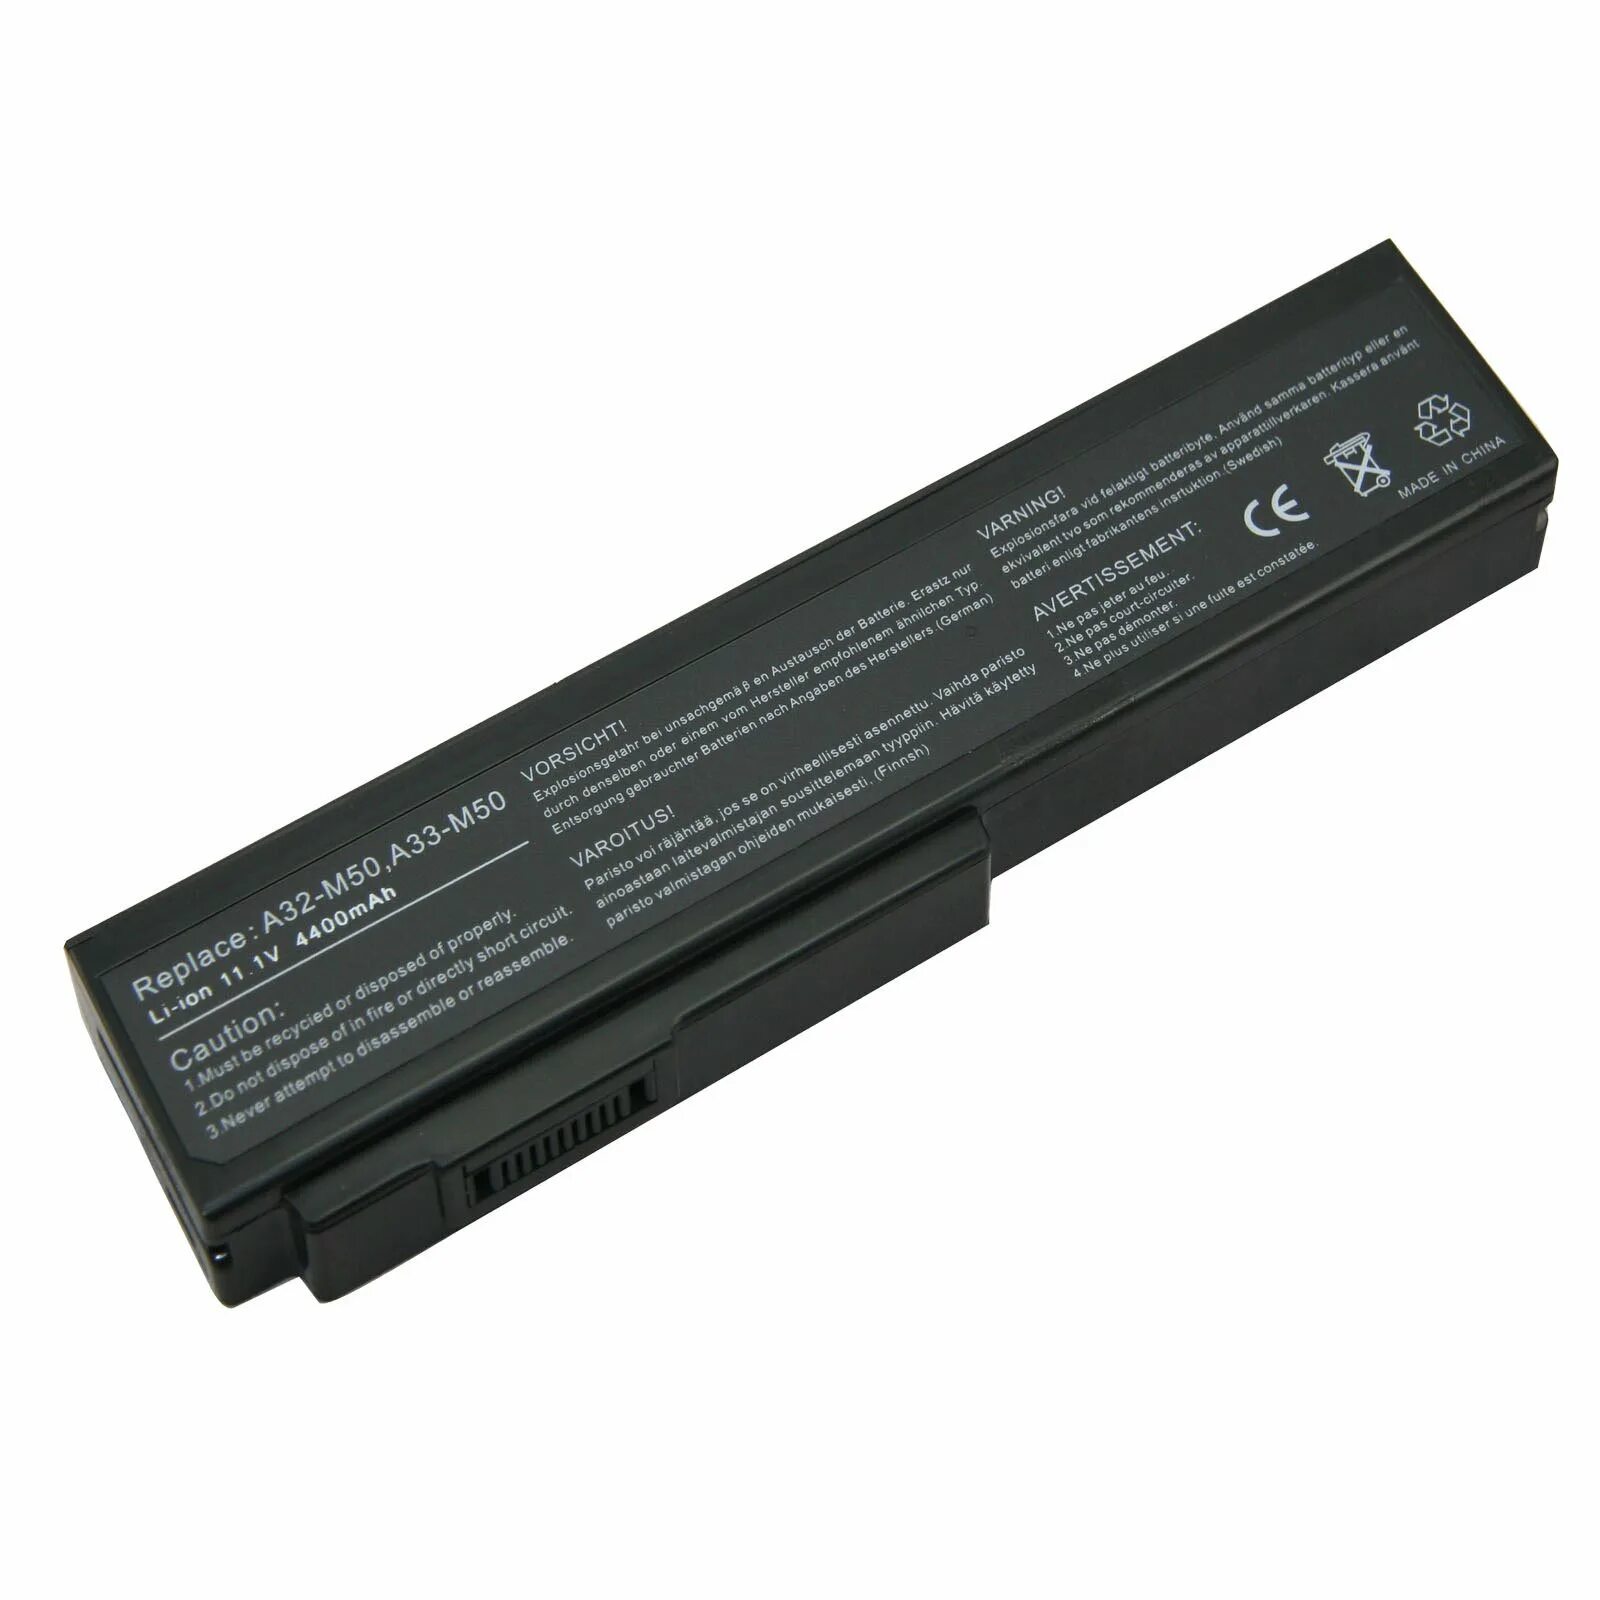 Аккумуляторы для батареи ноутбука. Аккумулятор (батарея) для ноутбука ASUS a32-x51 4400mah. Аккумулятор в ноутбук ASUS n53s. Батарейка на асус ноутбук. High quality Replacement Battery for ASUS pro23a (5200mah,.